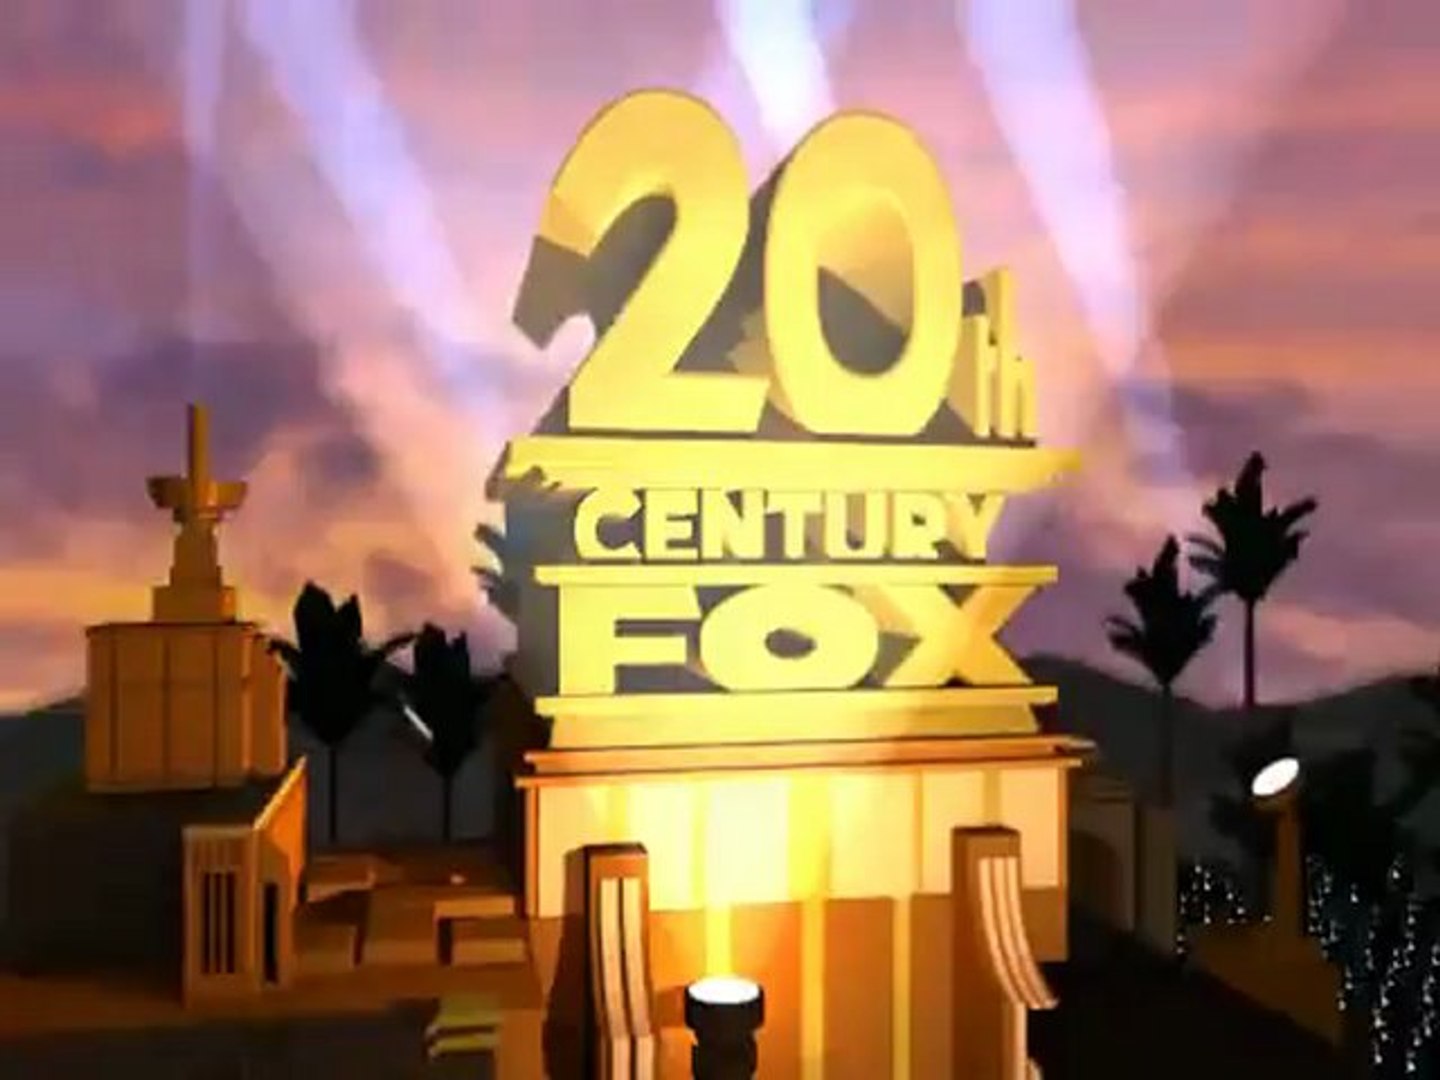 20th century fox logo 3D STUDIO MAX in Blender (C) 2009 Version  [www.keepvid.com] - video Dailymotion